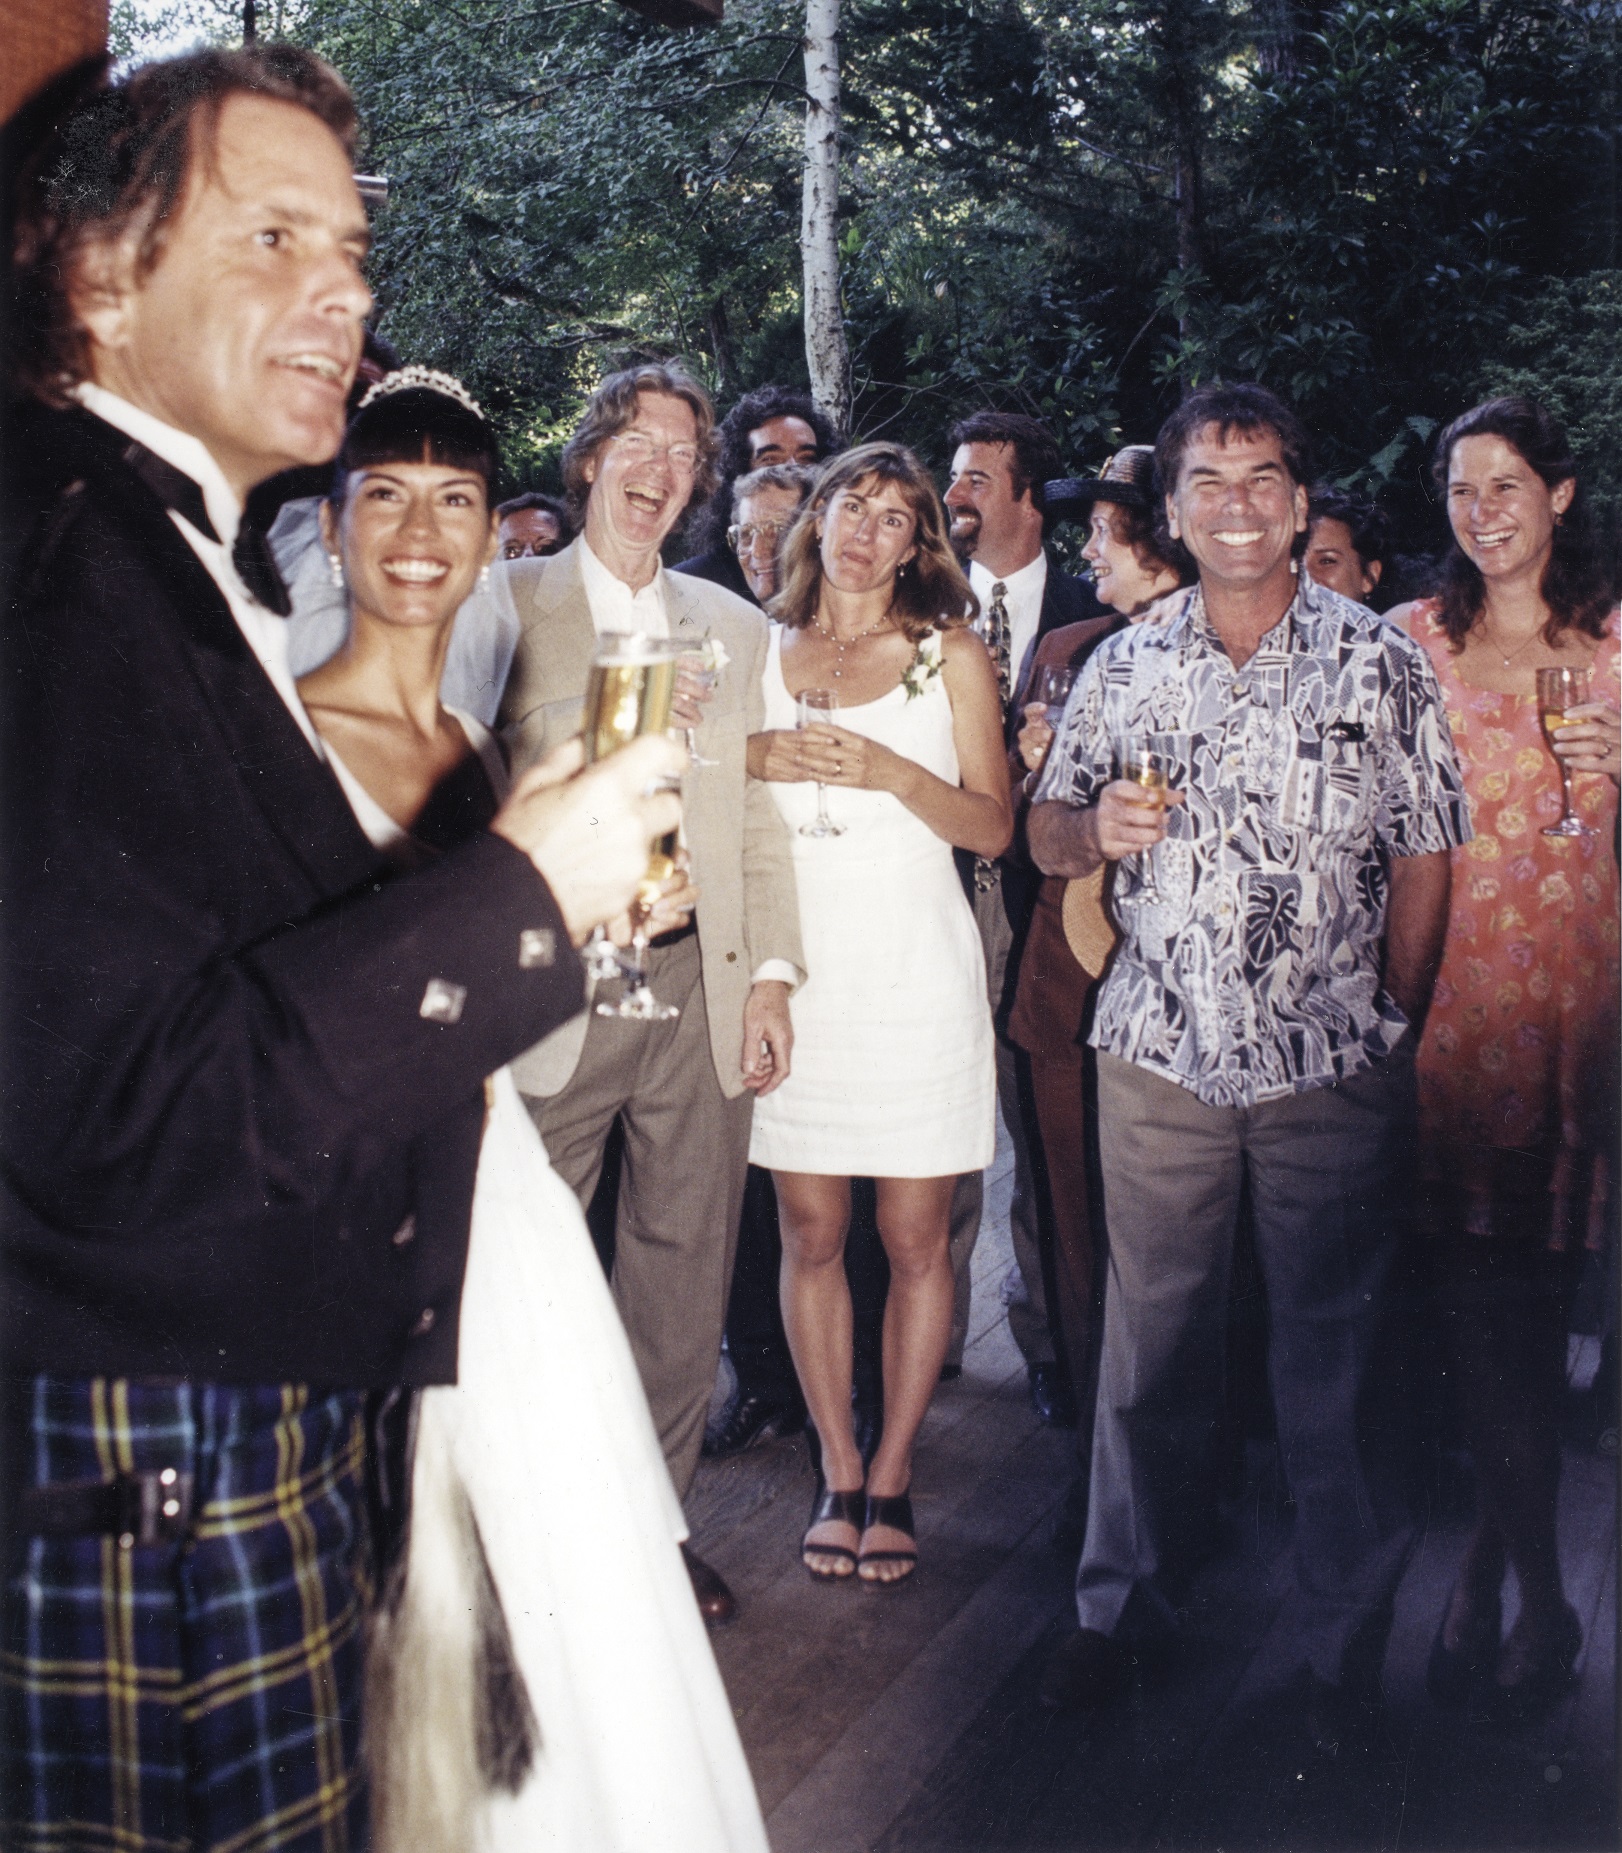 Bob Weir's wedding - photo by Susana Millman